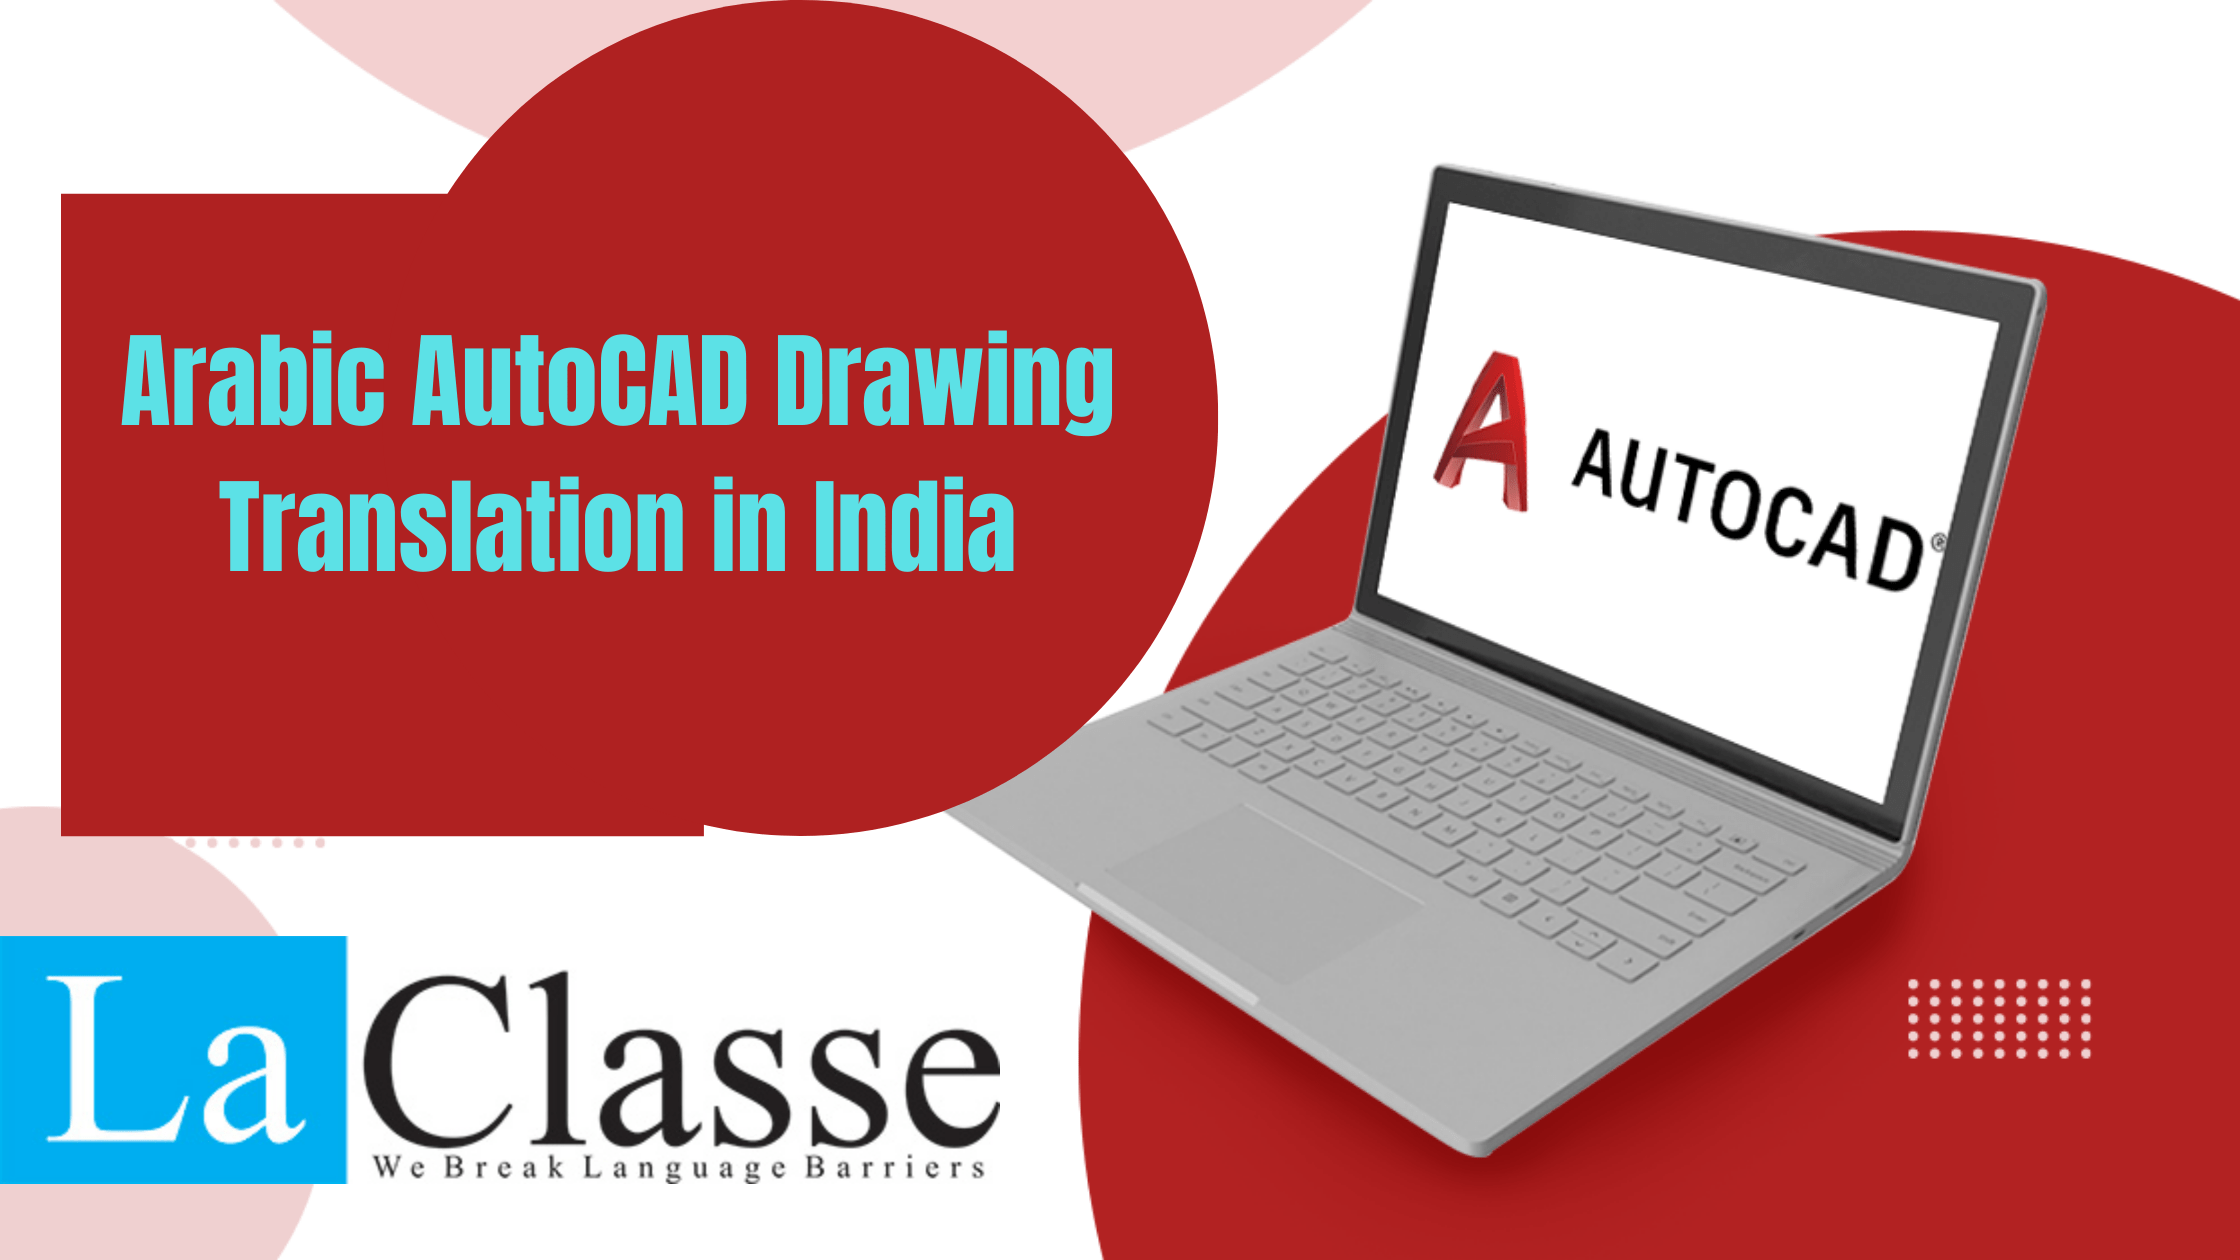 Arabic AutoCAD Drawing Translation in India